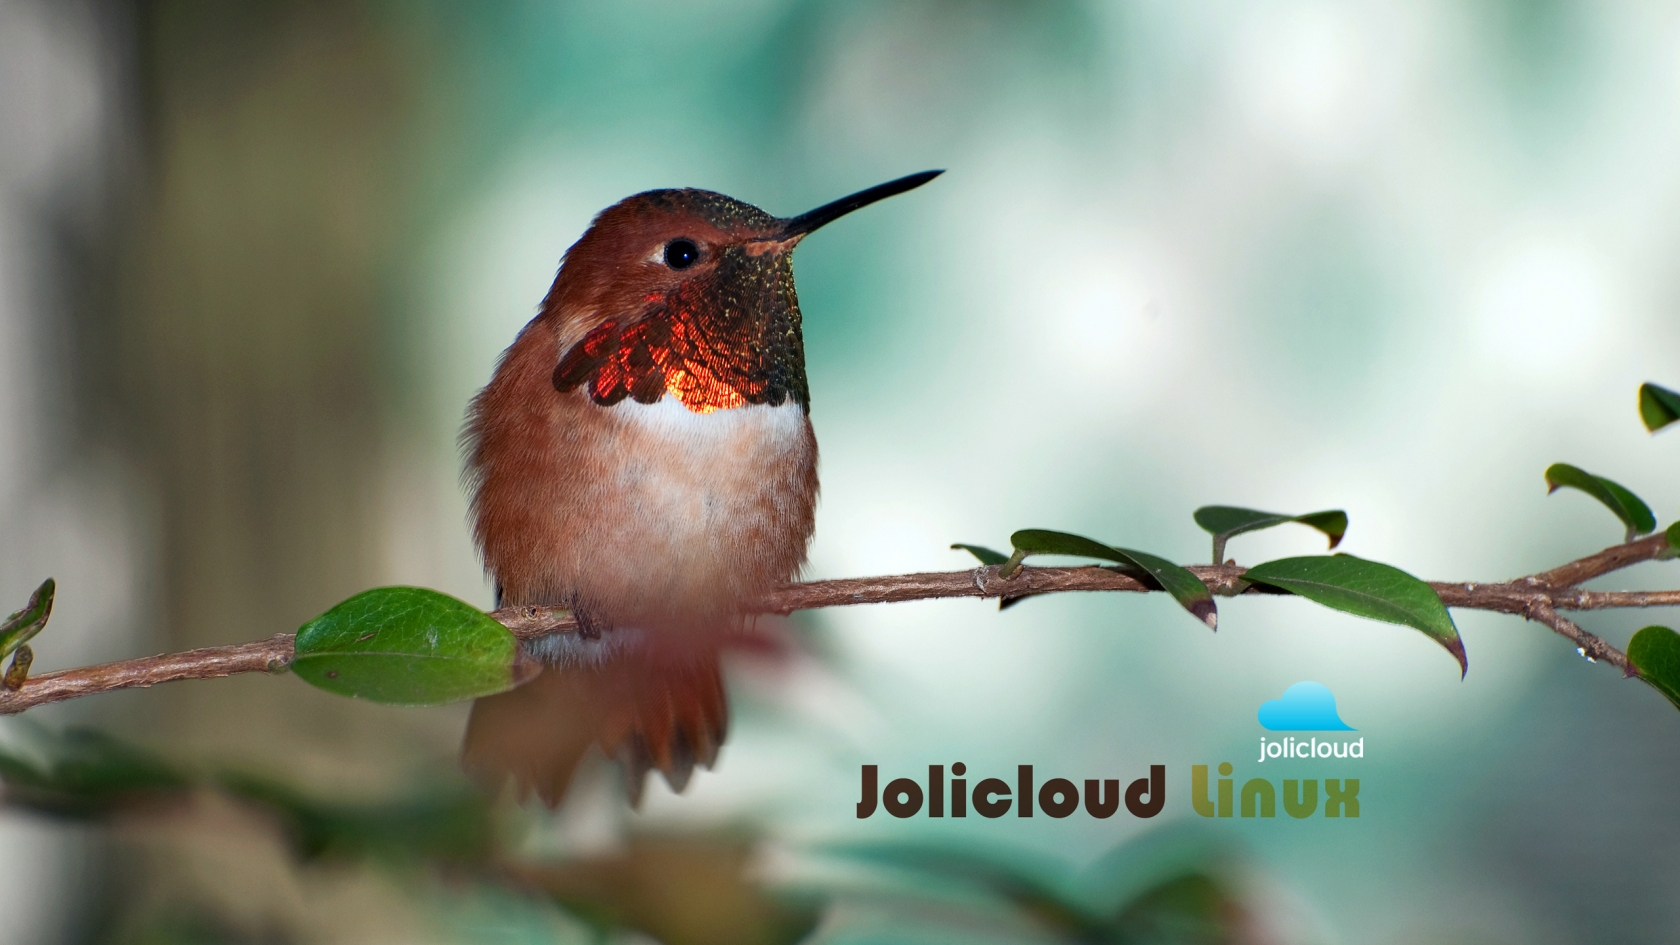 Jolicloud Linux Hummingbird for 1680 x 945 HDTV resolution